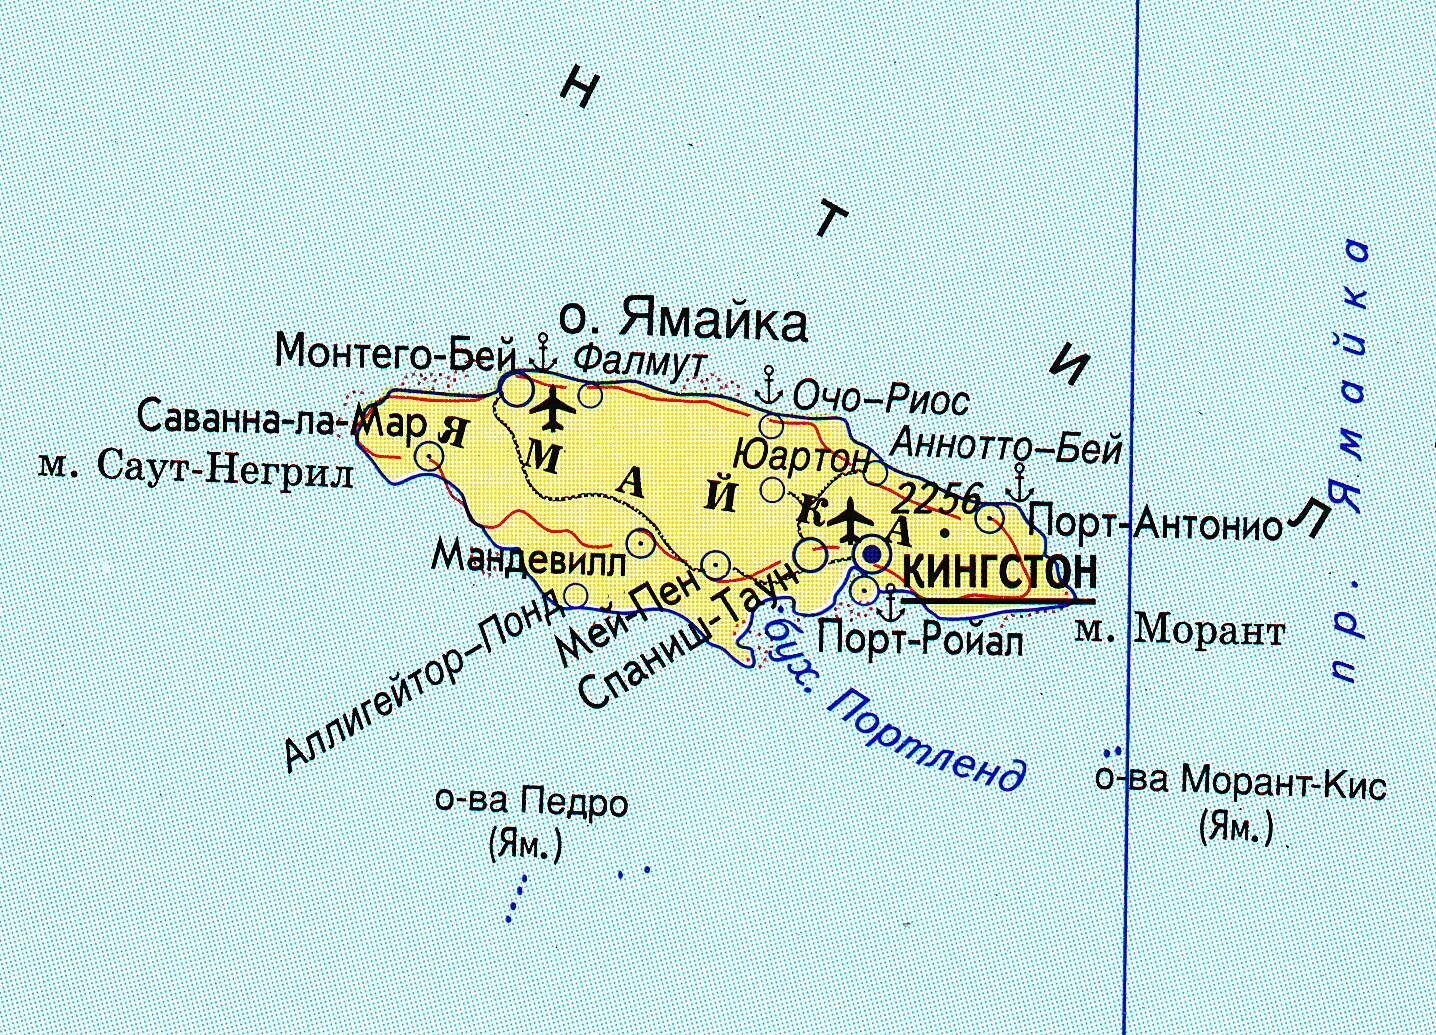 Ямайка на карте. Остров Ямайка на карте. Столица Ямайки на карте. Остров Ямайка на карте Северной Америки.